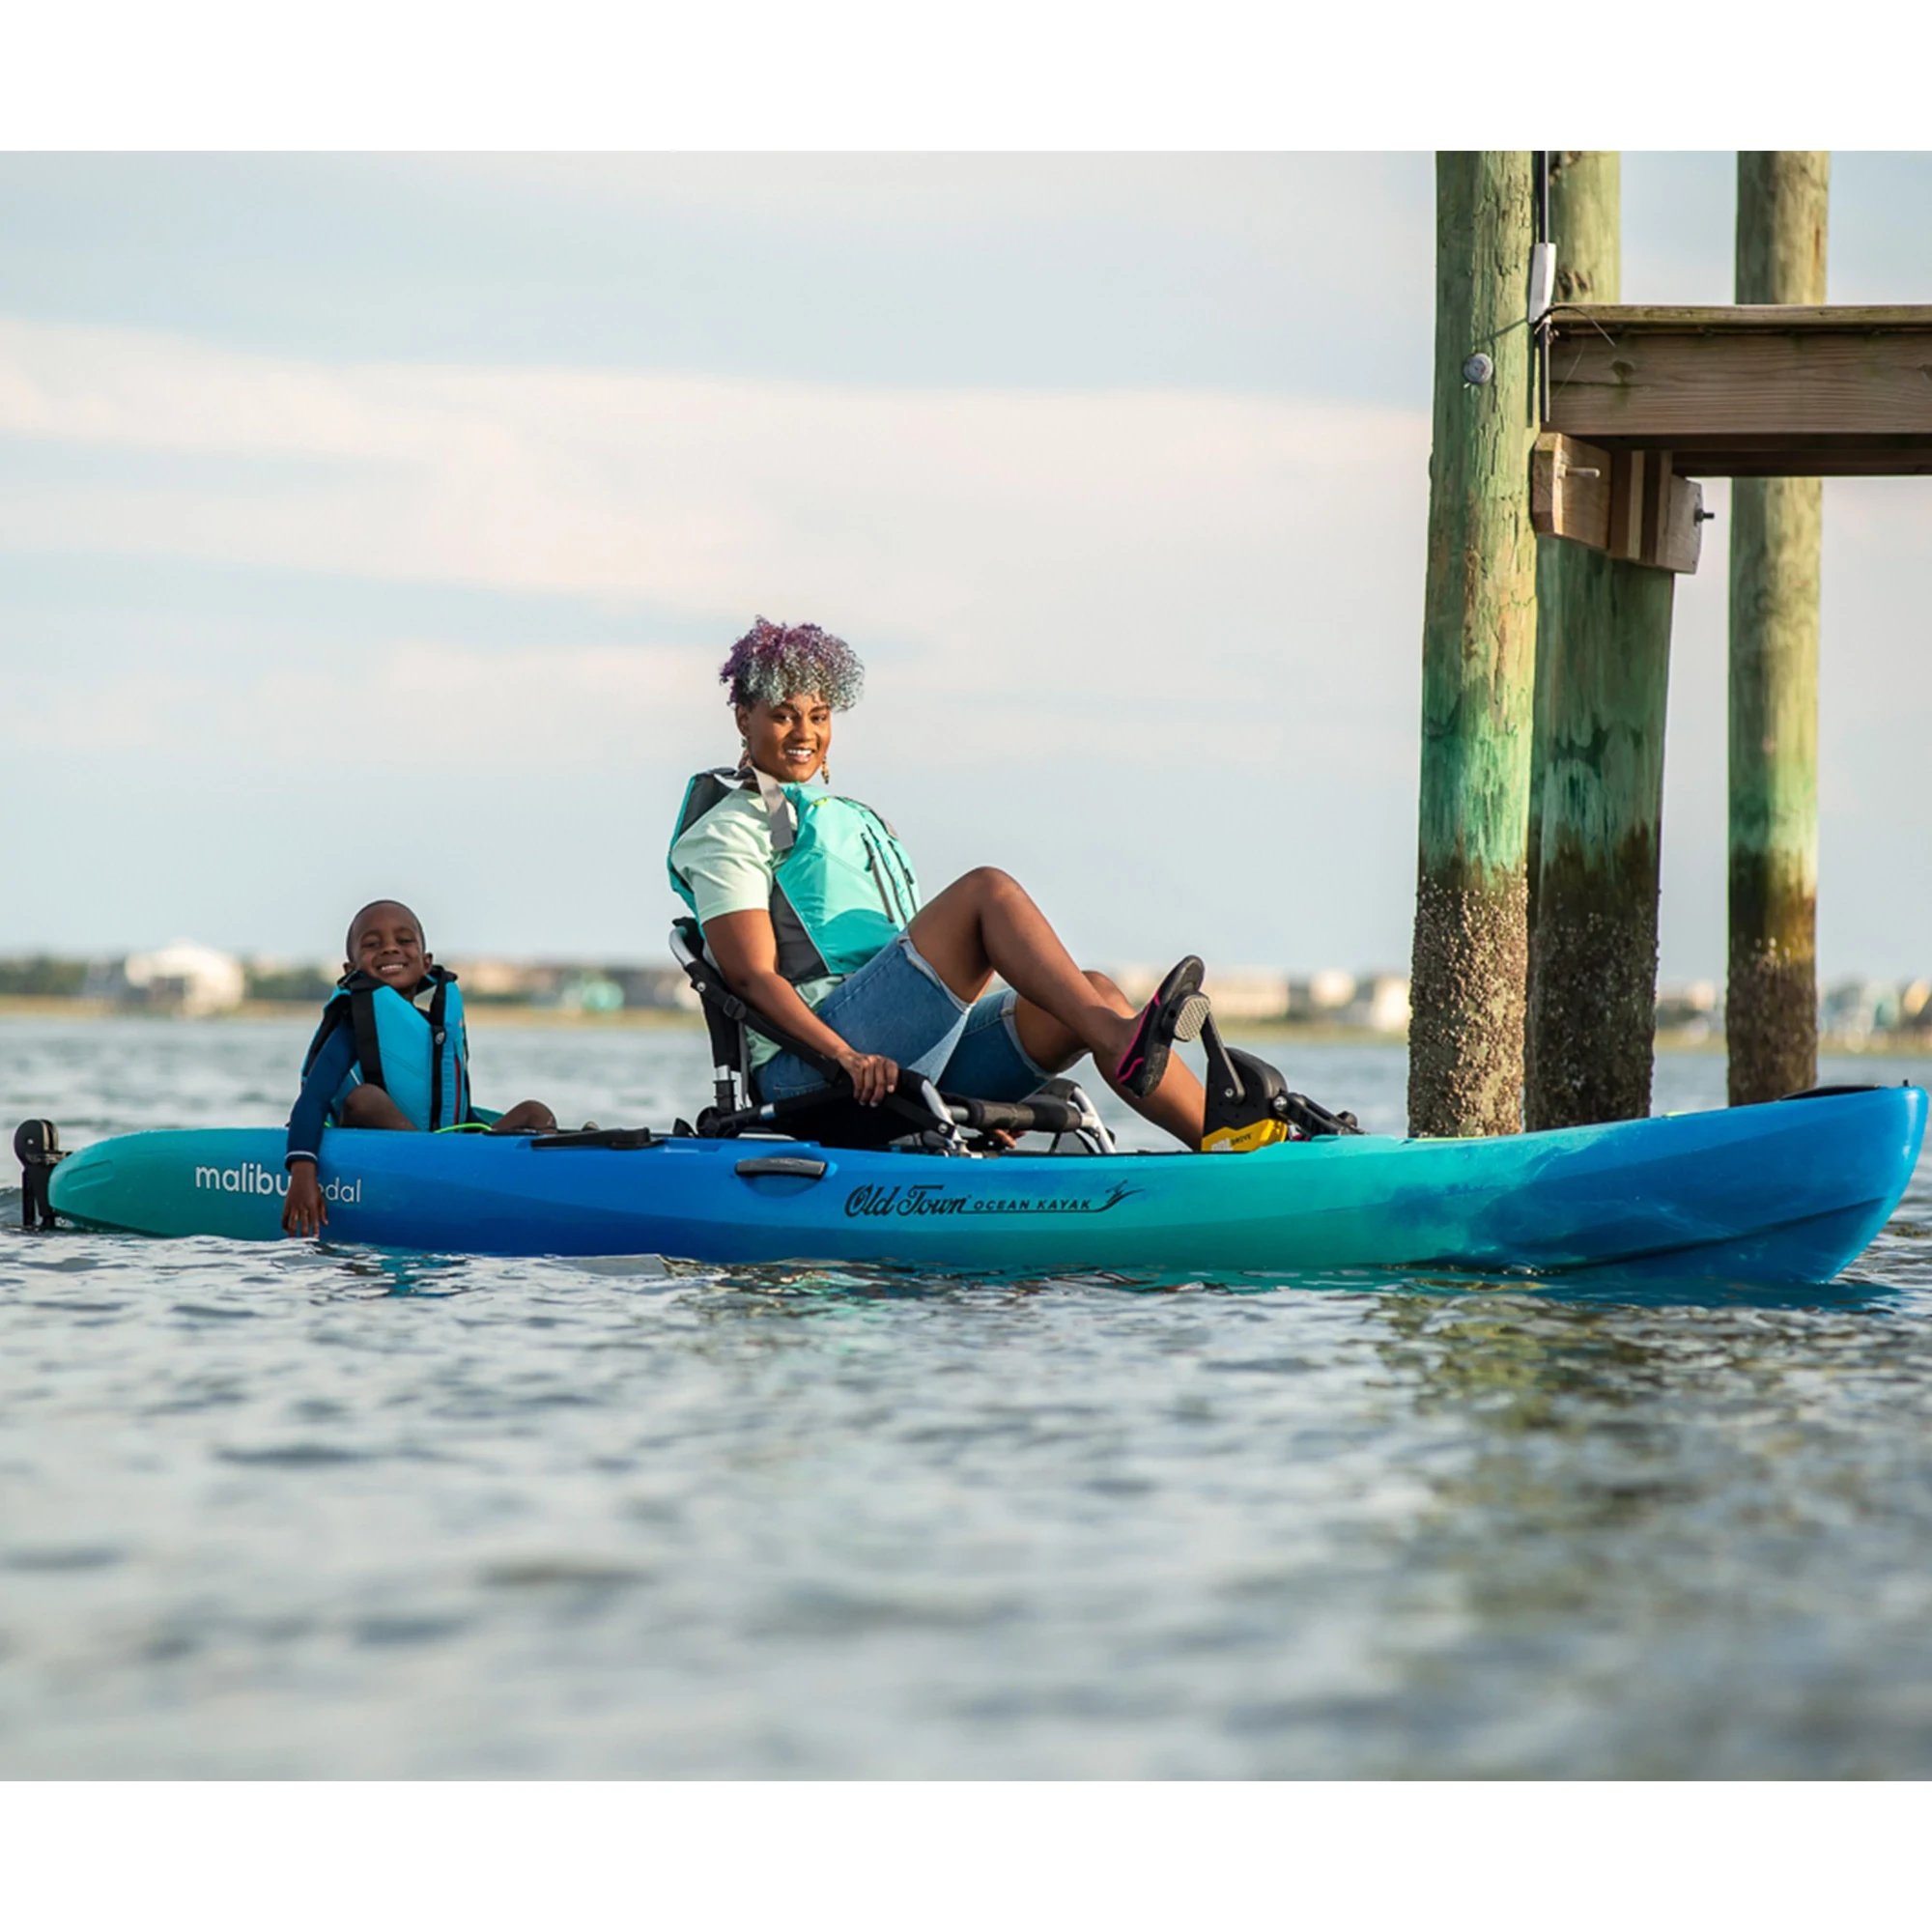 Woman with child pedaling in the Old Town Ocean Kayak Malibu PDL kayak